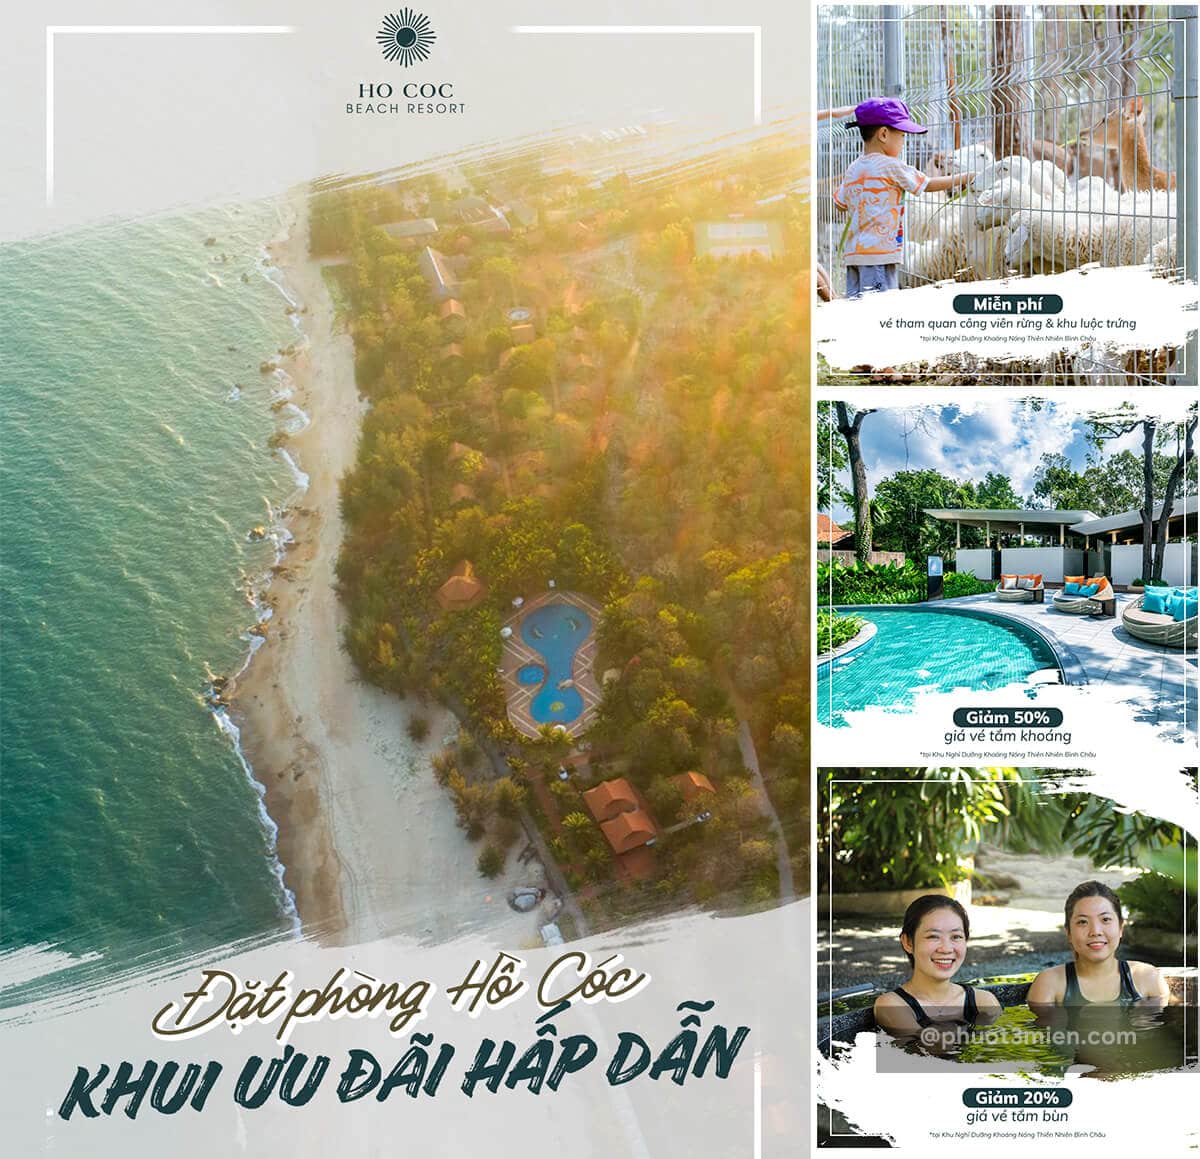 Hồ cốc beach resort discount